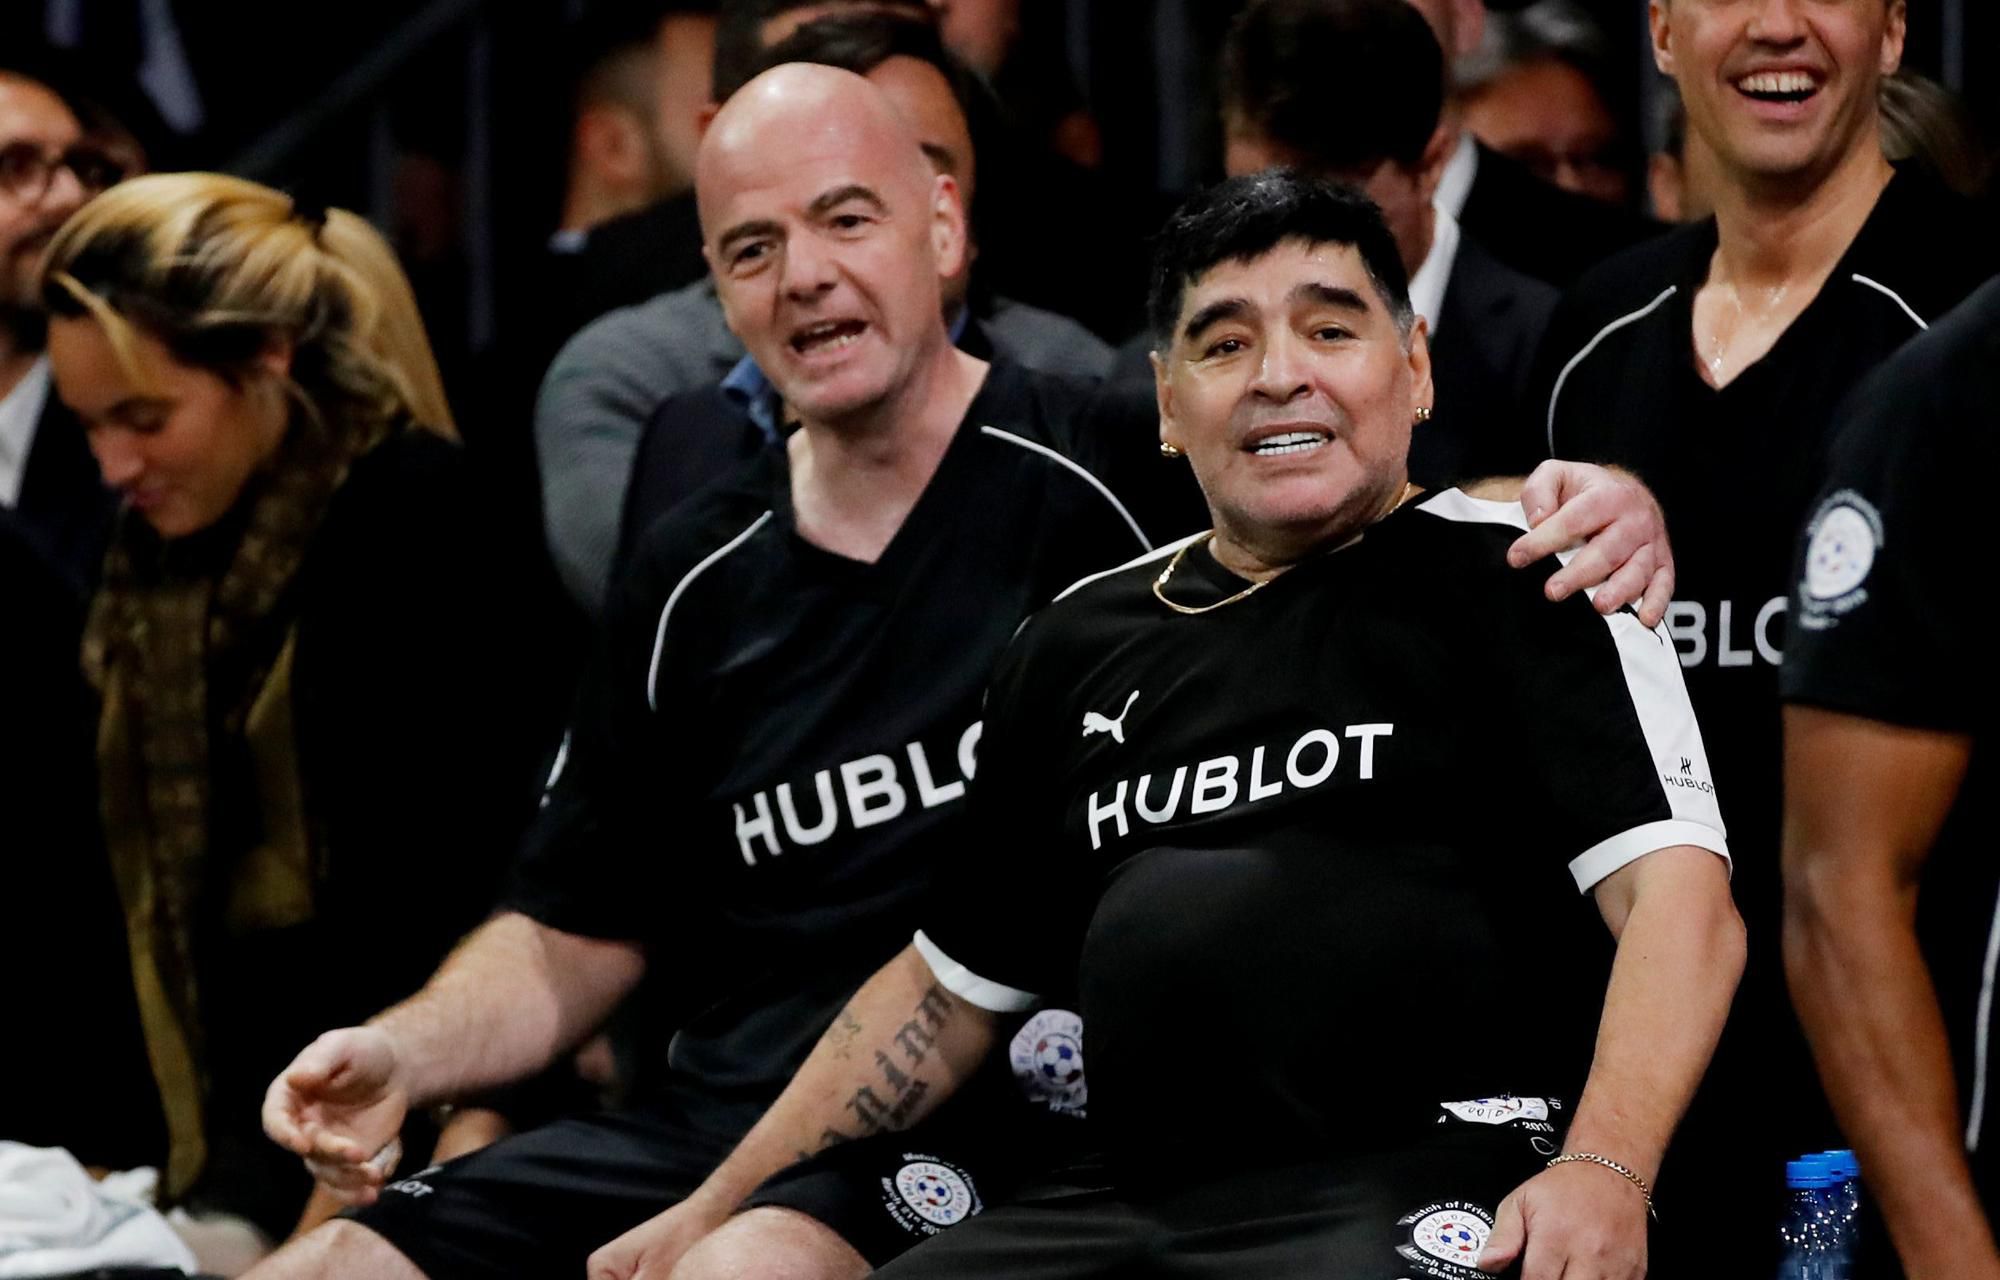 Diego Maradona a prezident FIFA Gianni Infantino na akcii Hublotu